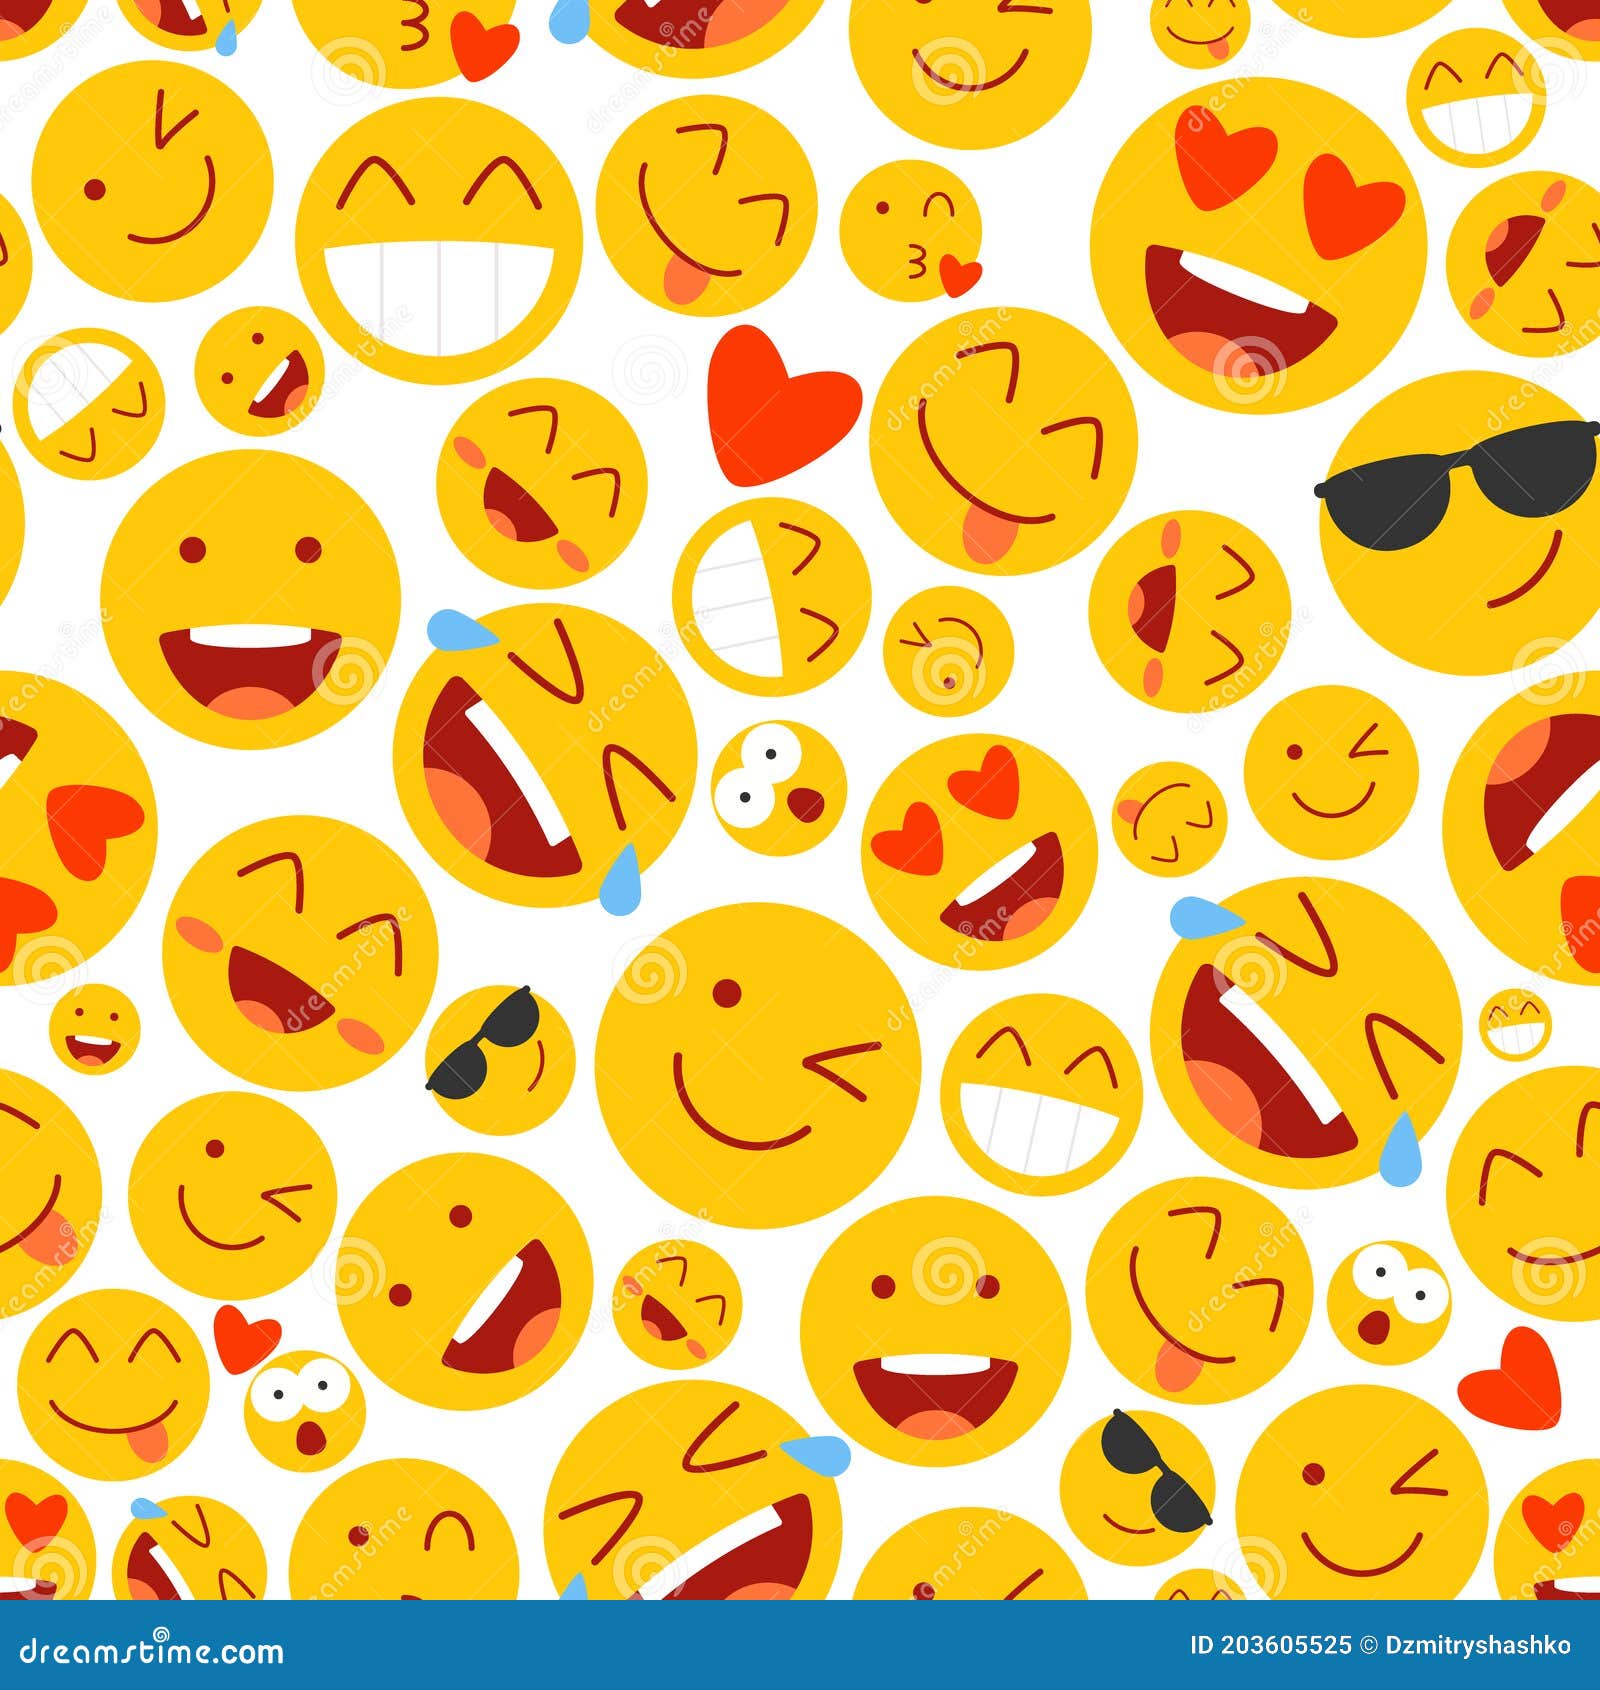 emoji seamless pattern